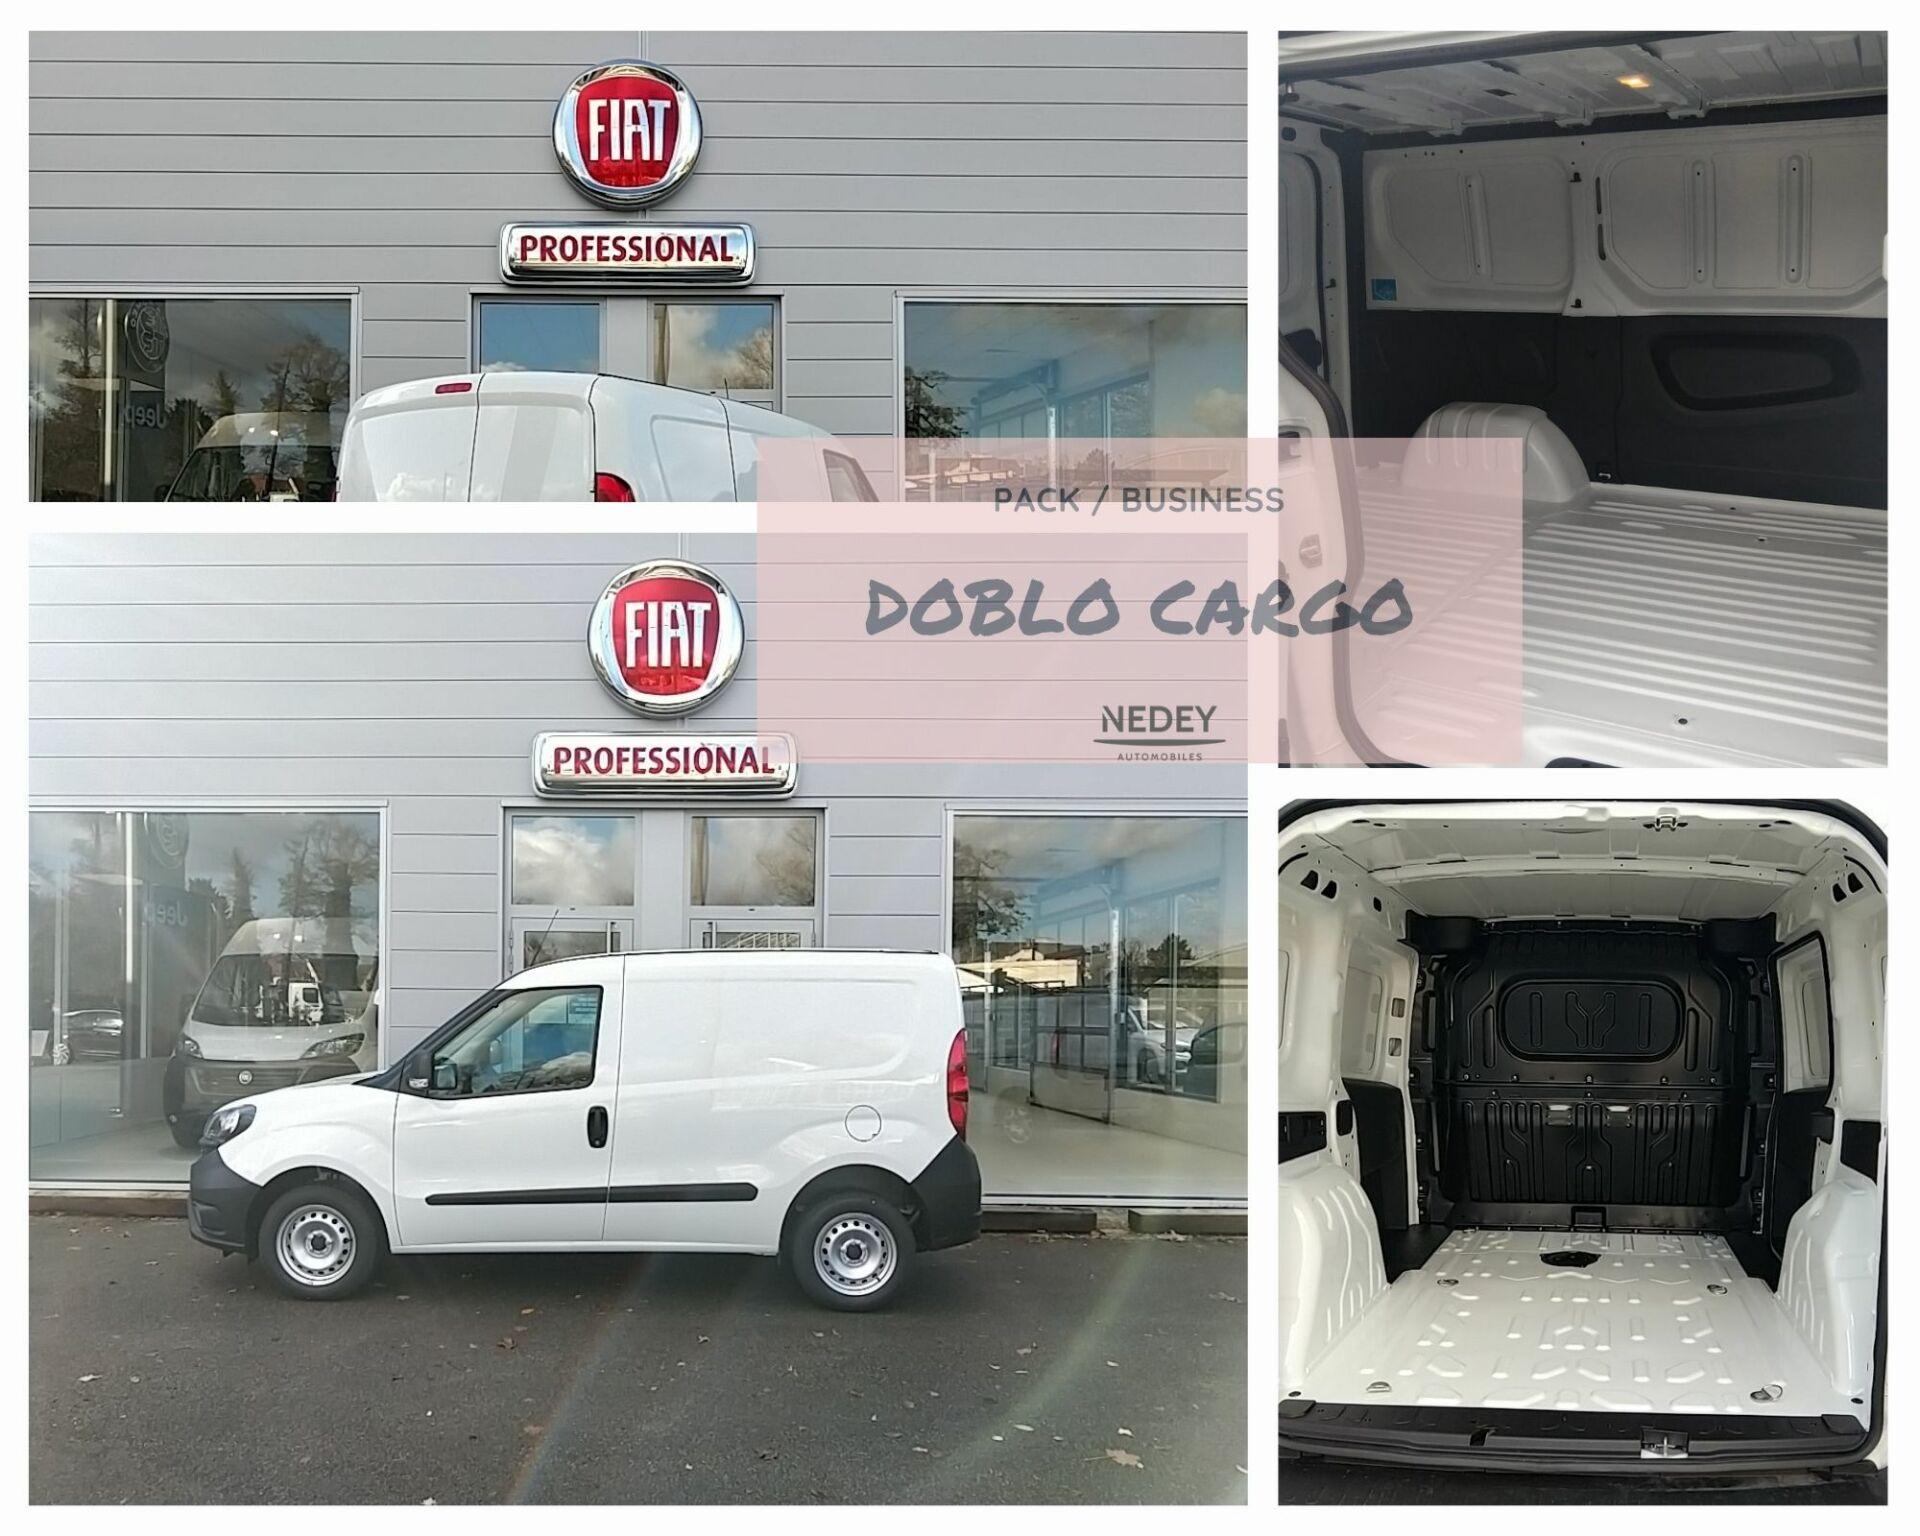 Image Fiat Professionnal Doblo Cargo